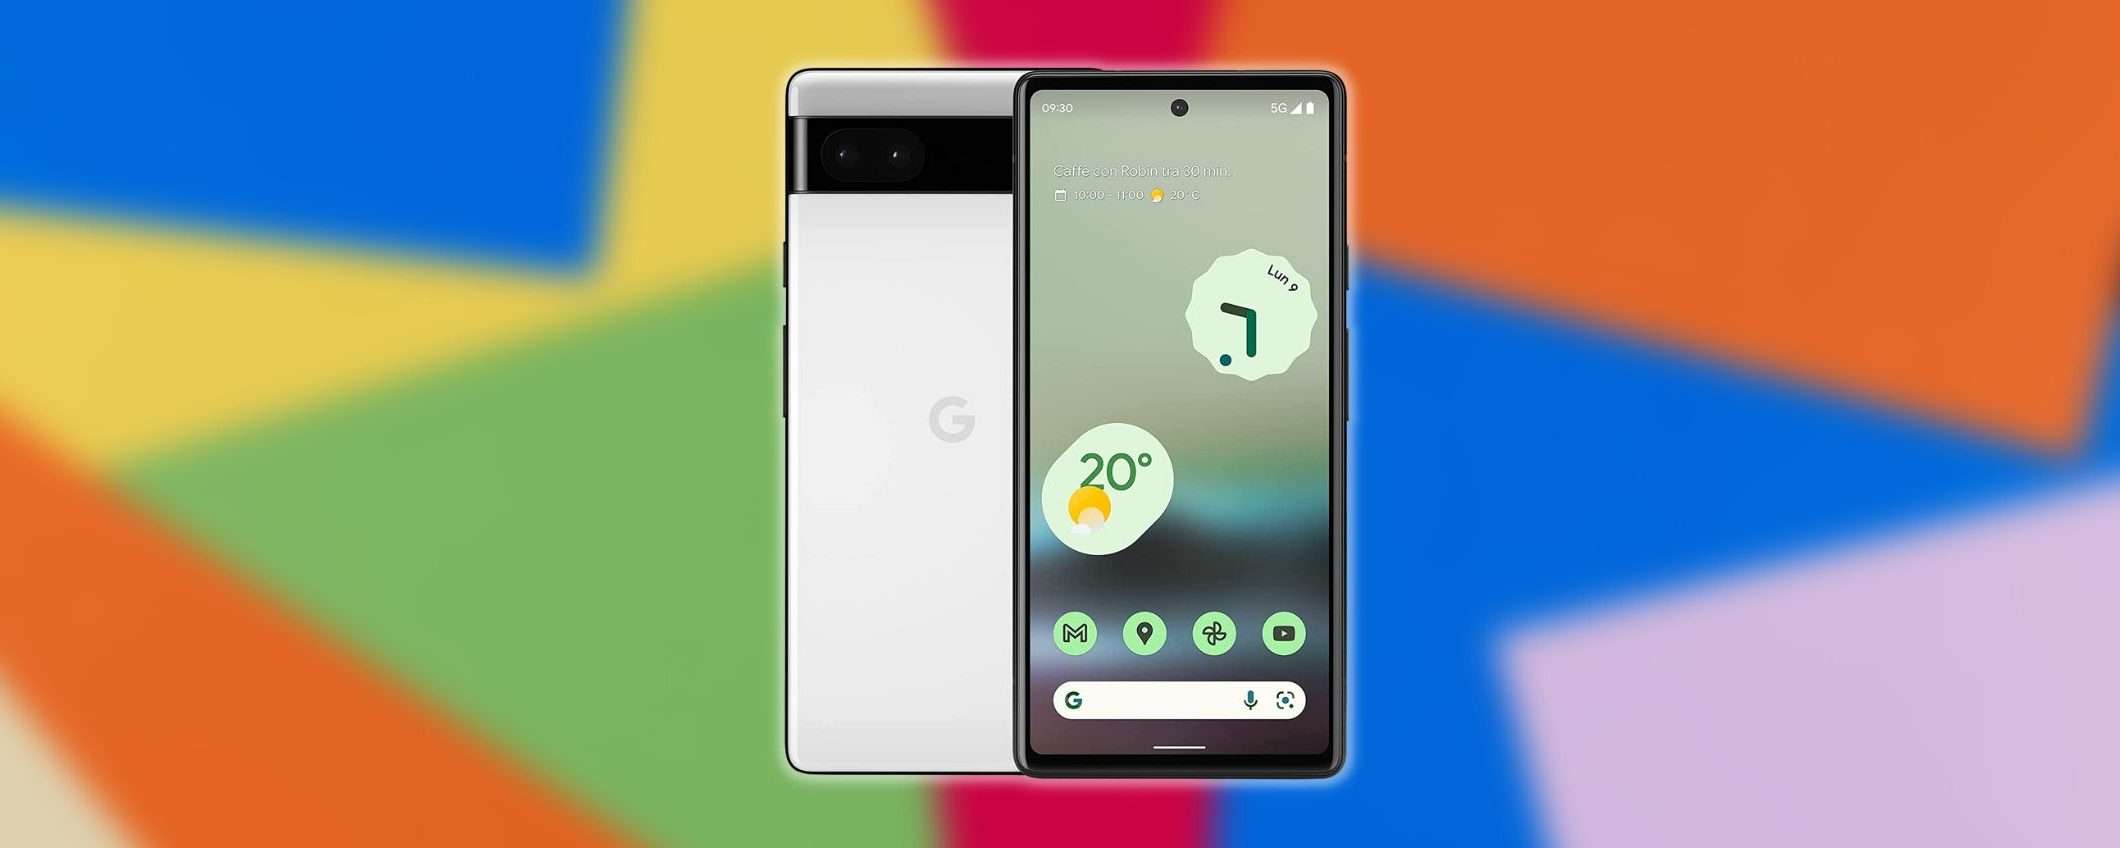 Google Pixel 6a: è ancora Black Friday, offerta al minimo storico